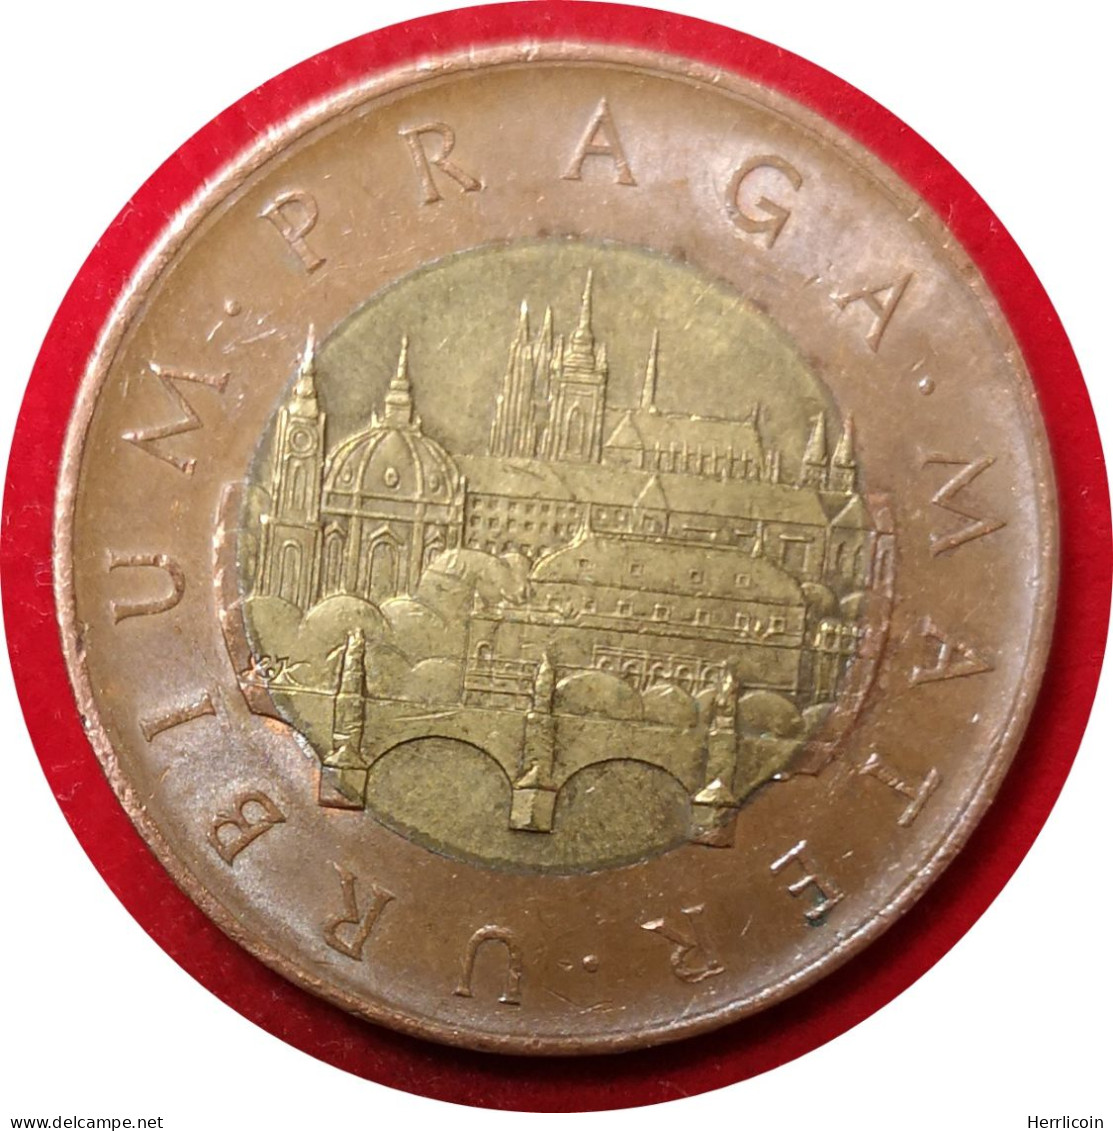 Monnaie  République Tchèque - 2010 - 50 Korun - Tschechische Rep.